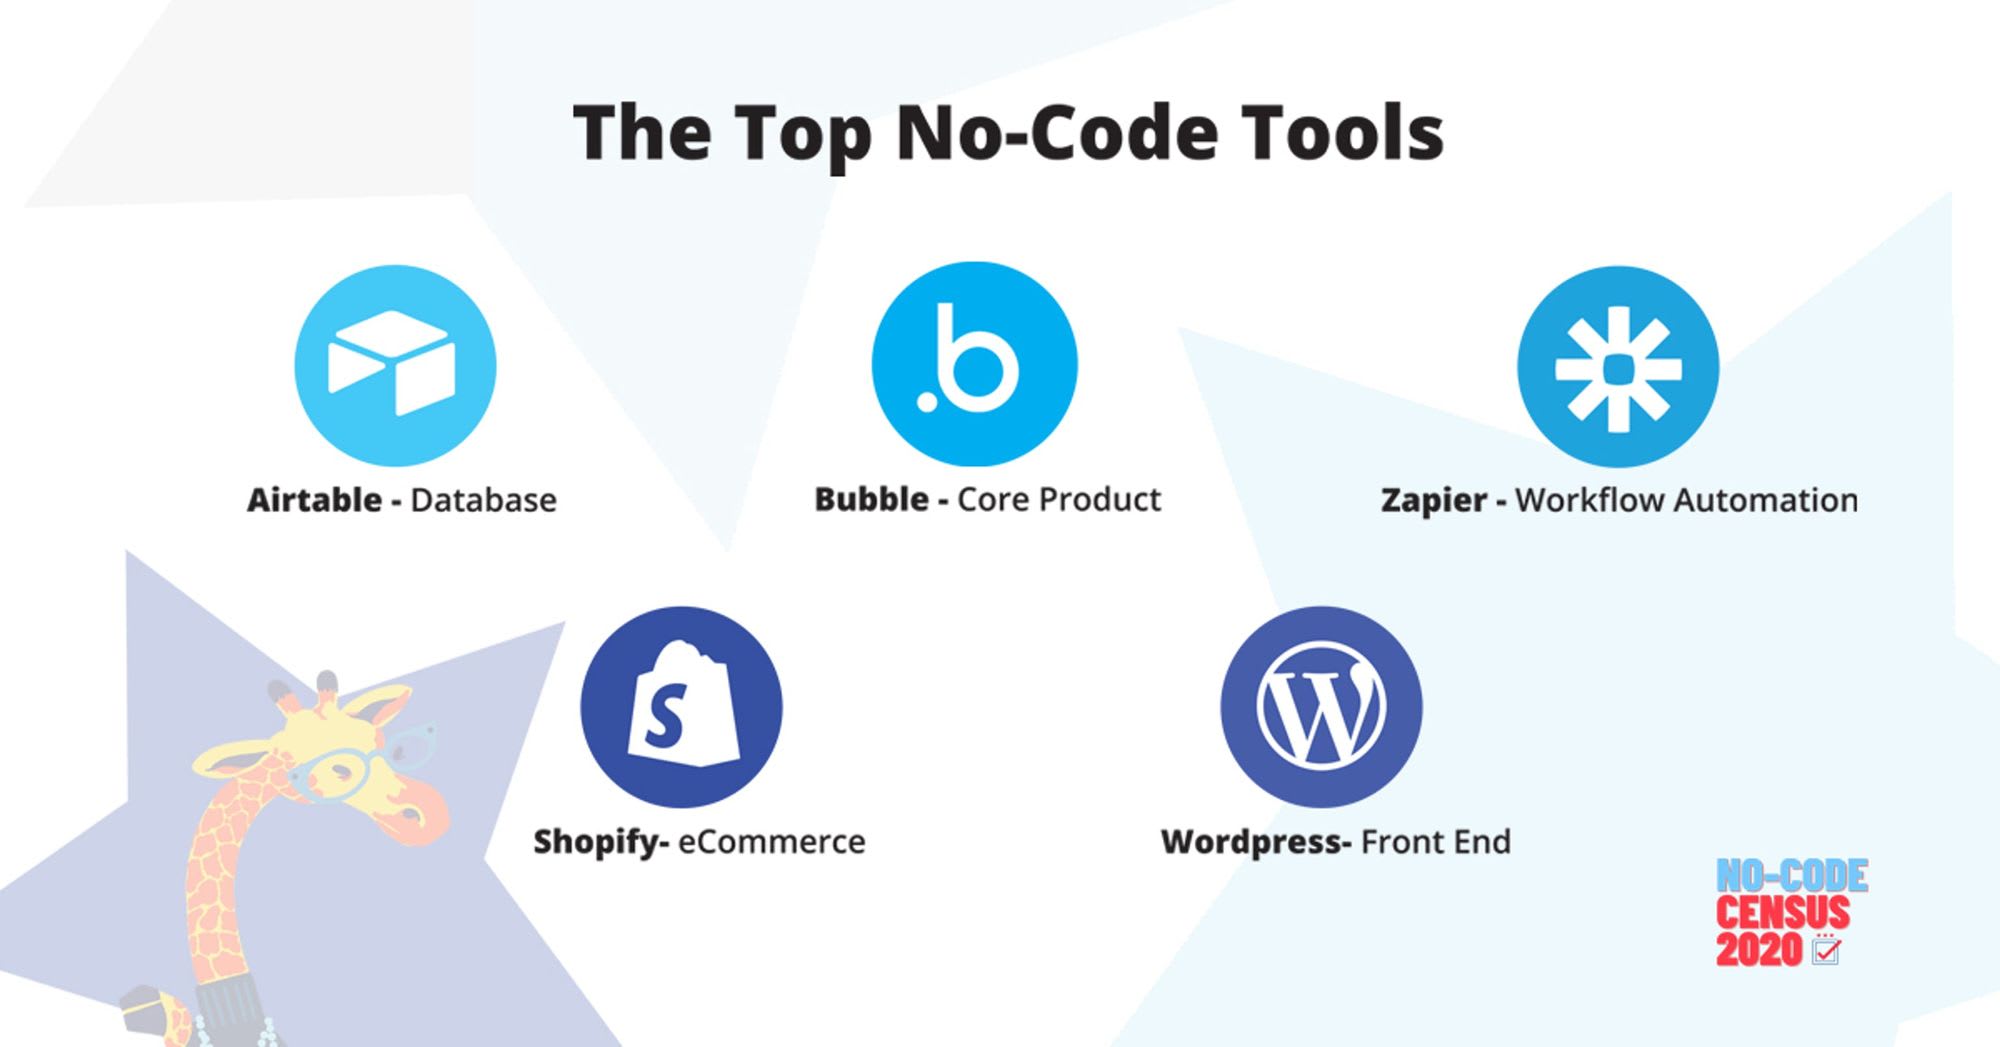 Top No-code Tools image logos